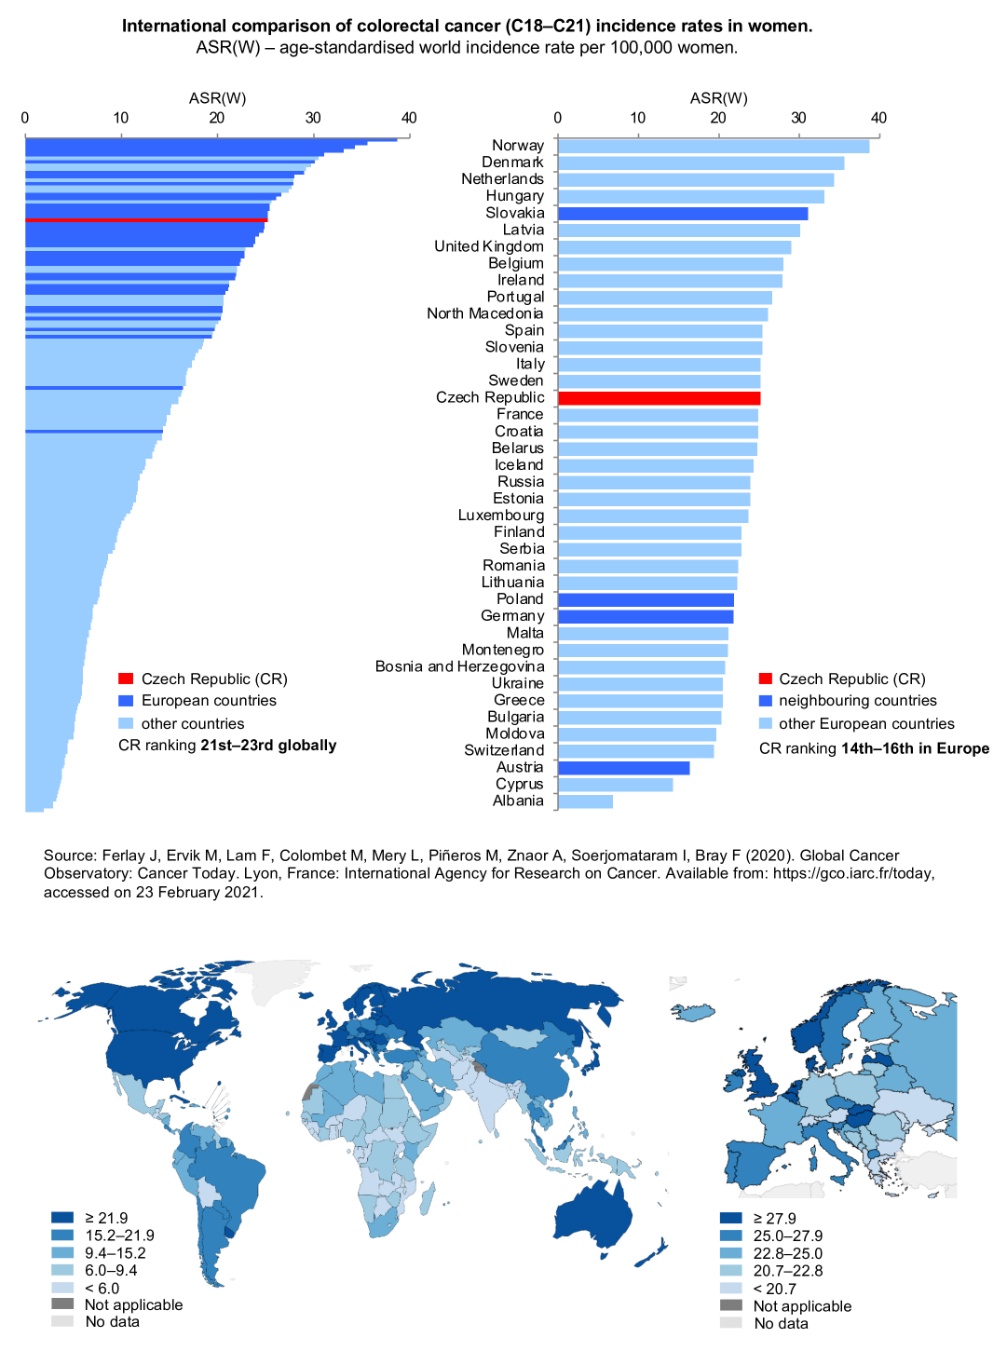 Figure 1c: International comparison of colorectal cancer incidence rates – women. ASR(W) – age-standardized world incidence rate per 100,000 population. Source: GLOBOCAN 2020